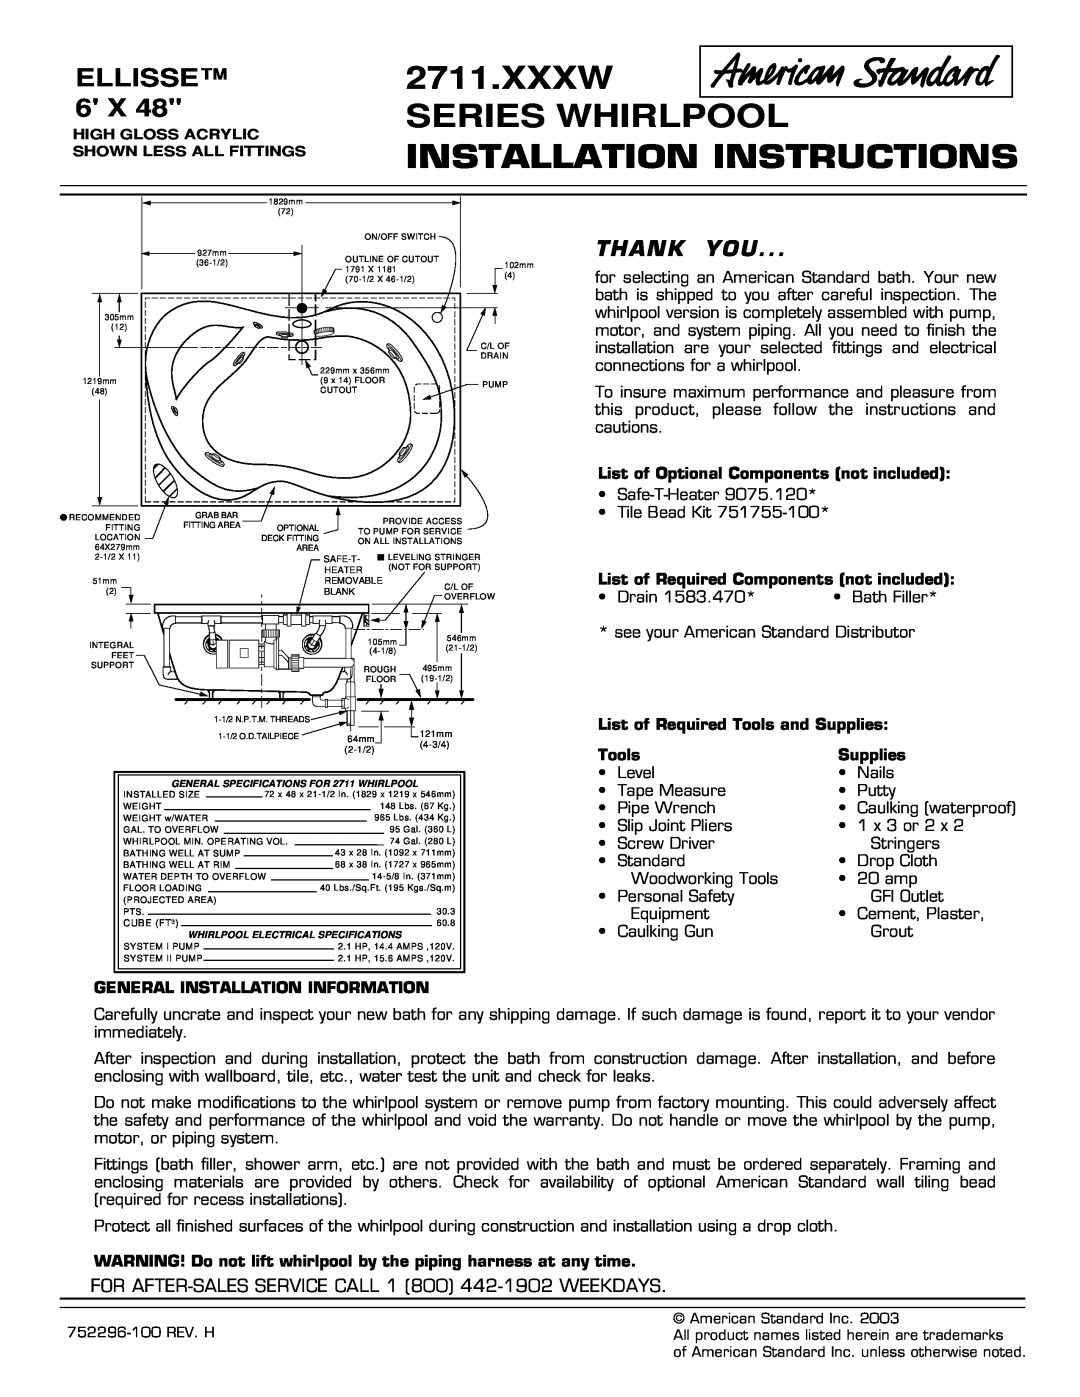 American Standard 2711.XXXW installation instructions Xxxw Series Whirlpool, Installation Instructions, Ellisse, Thank You 